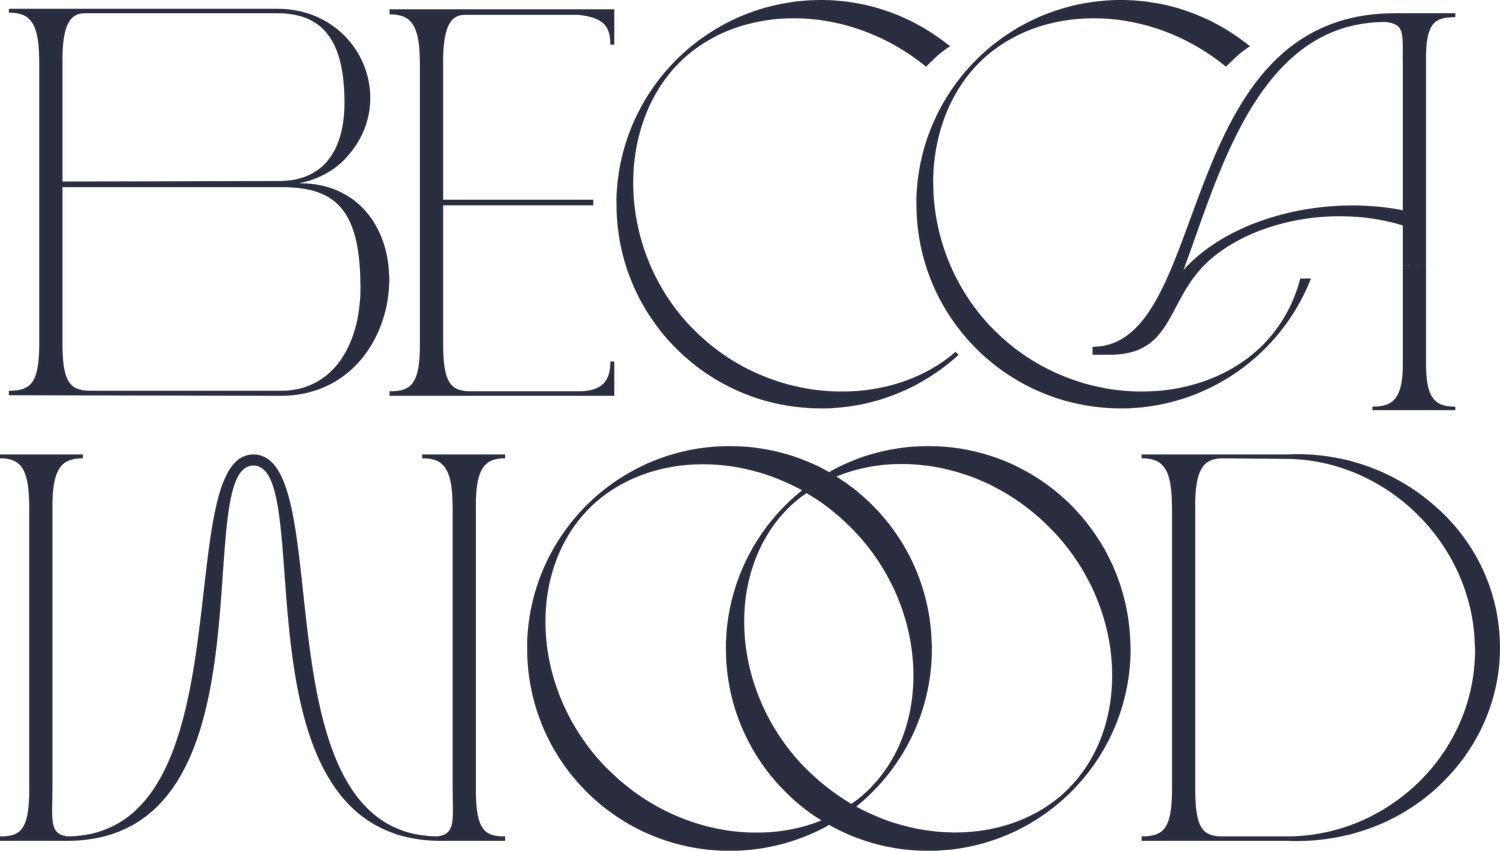 Becca Wood Squarespace Website Design and Development Agency